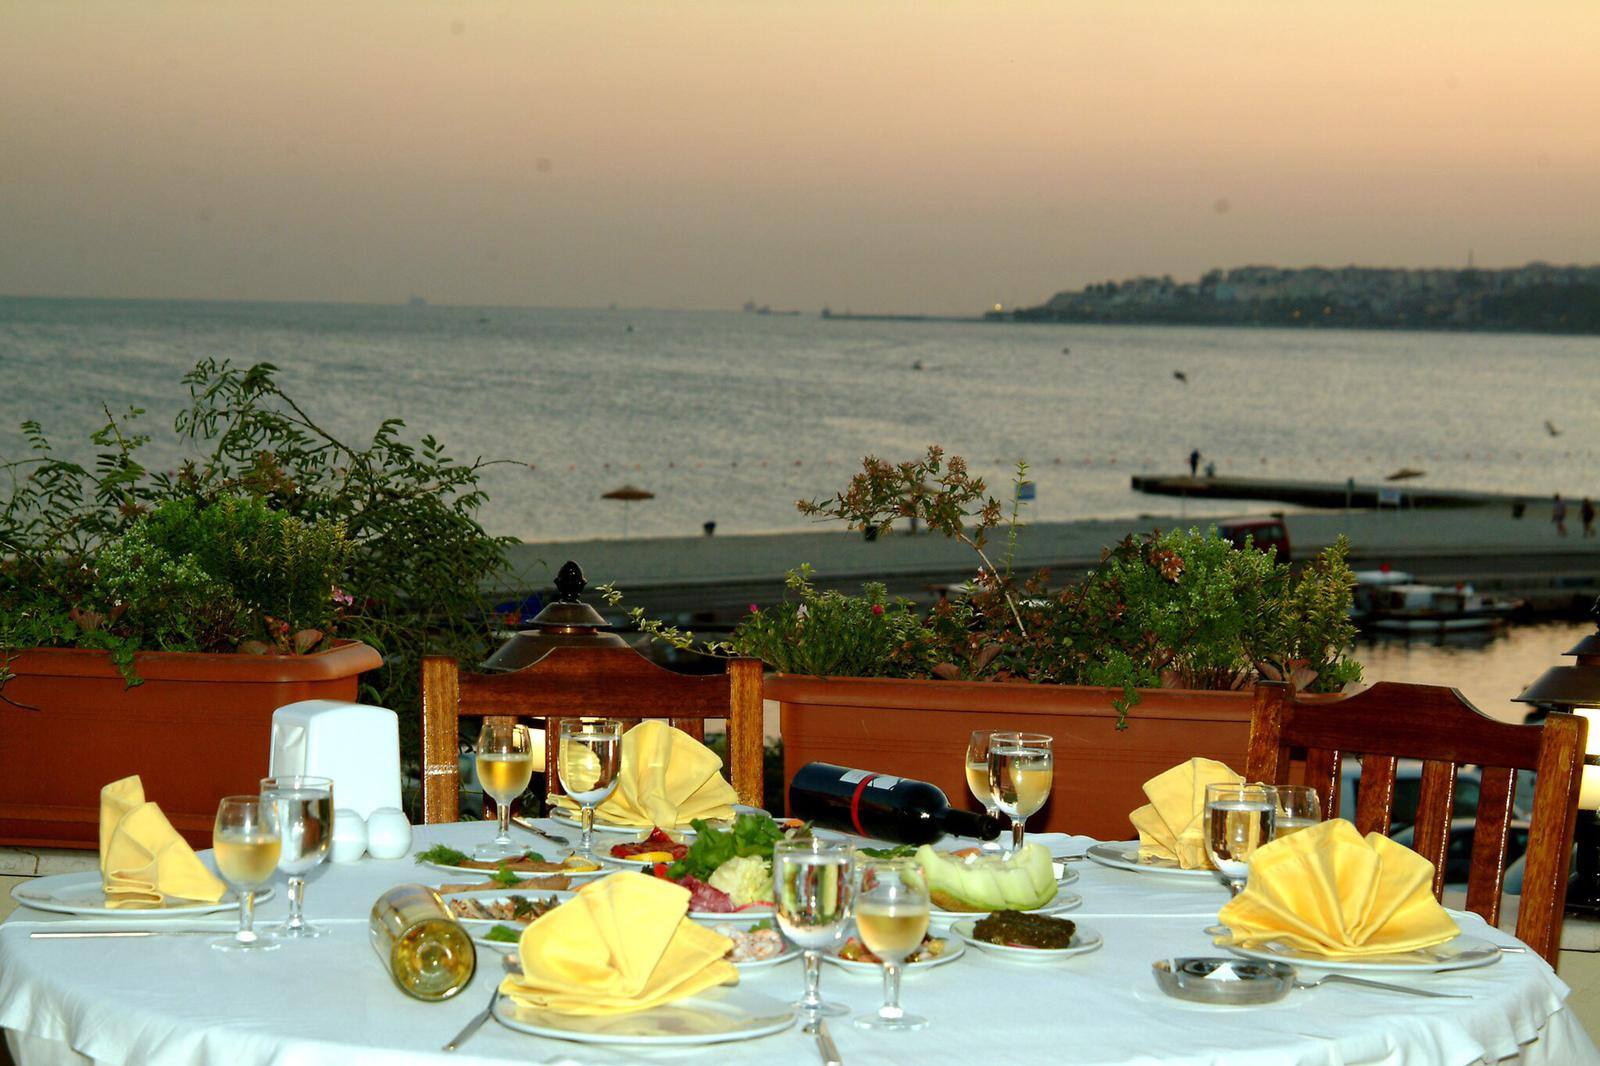 Masmavi Balik Restaurant Menu Menu For Masmavi Balik Restaurant Basinkoy Istanbul